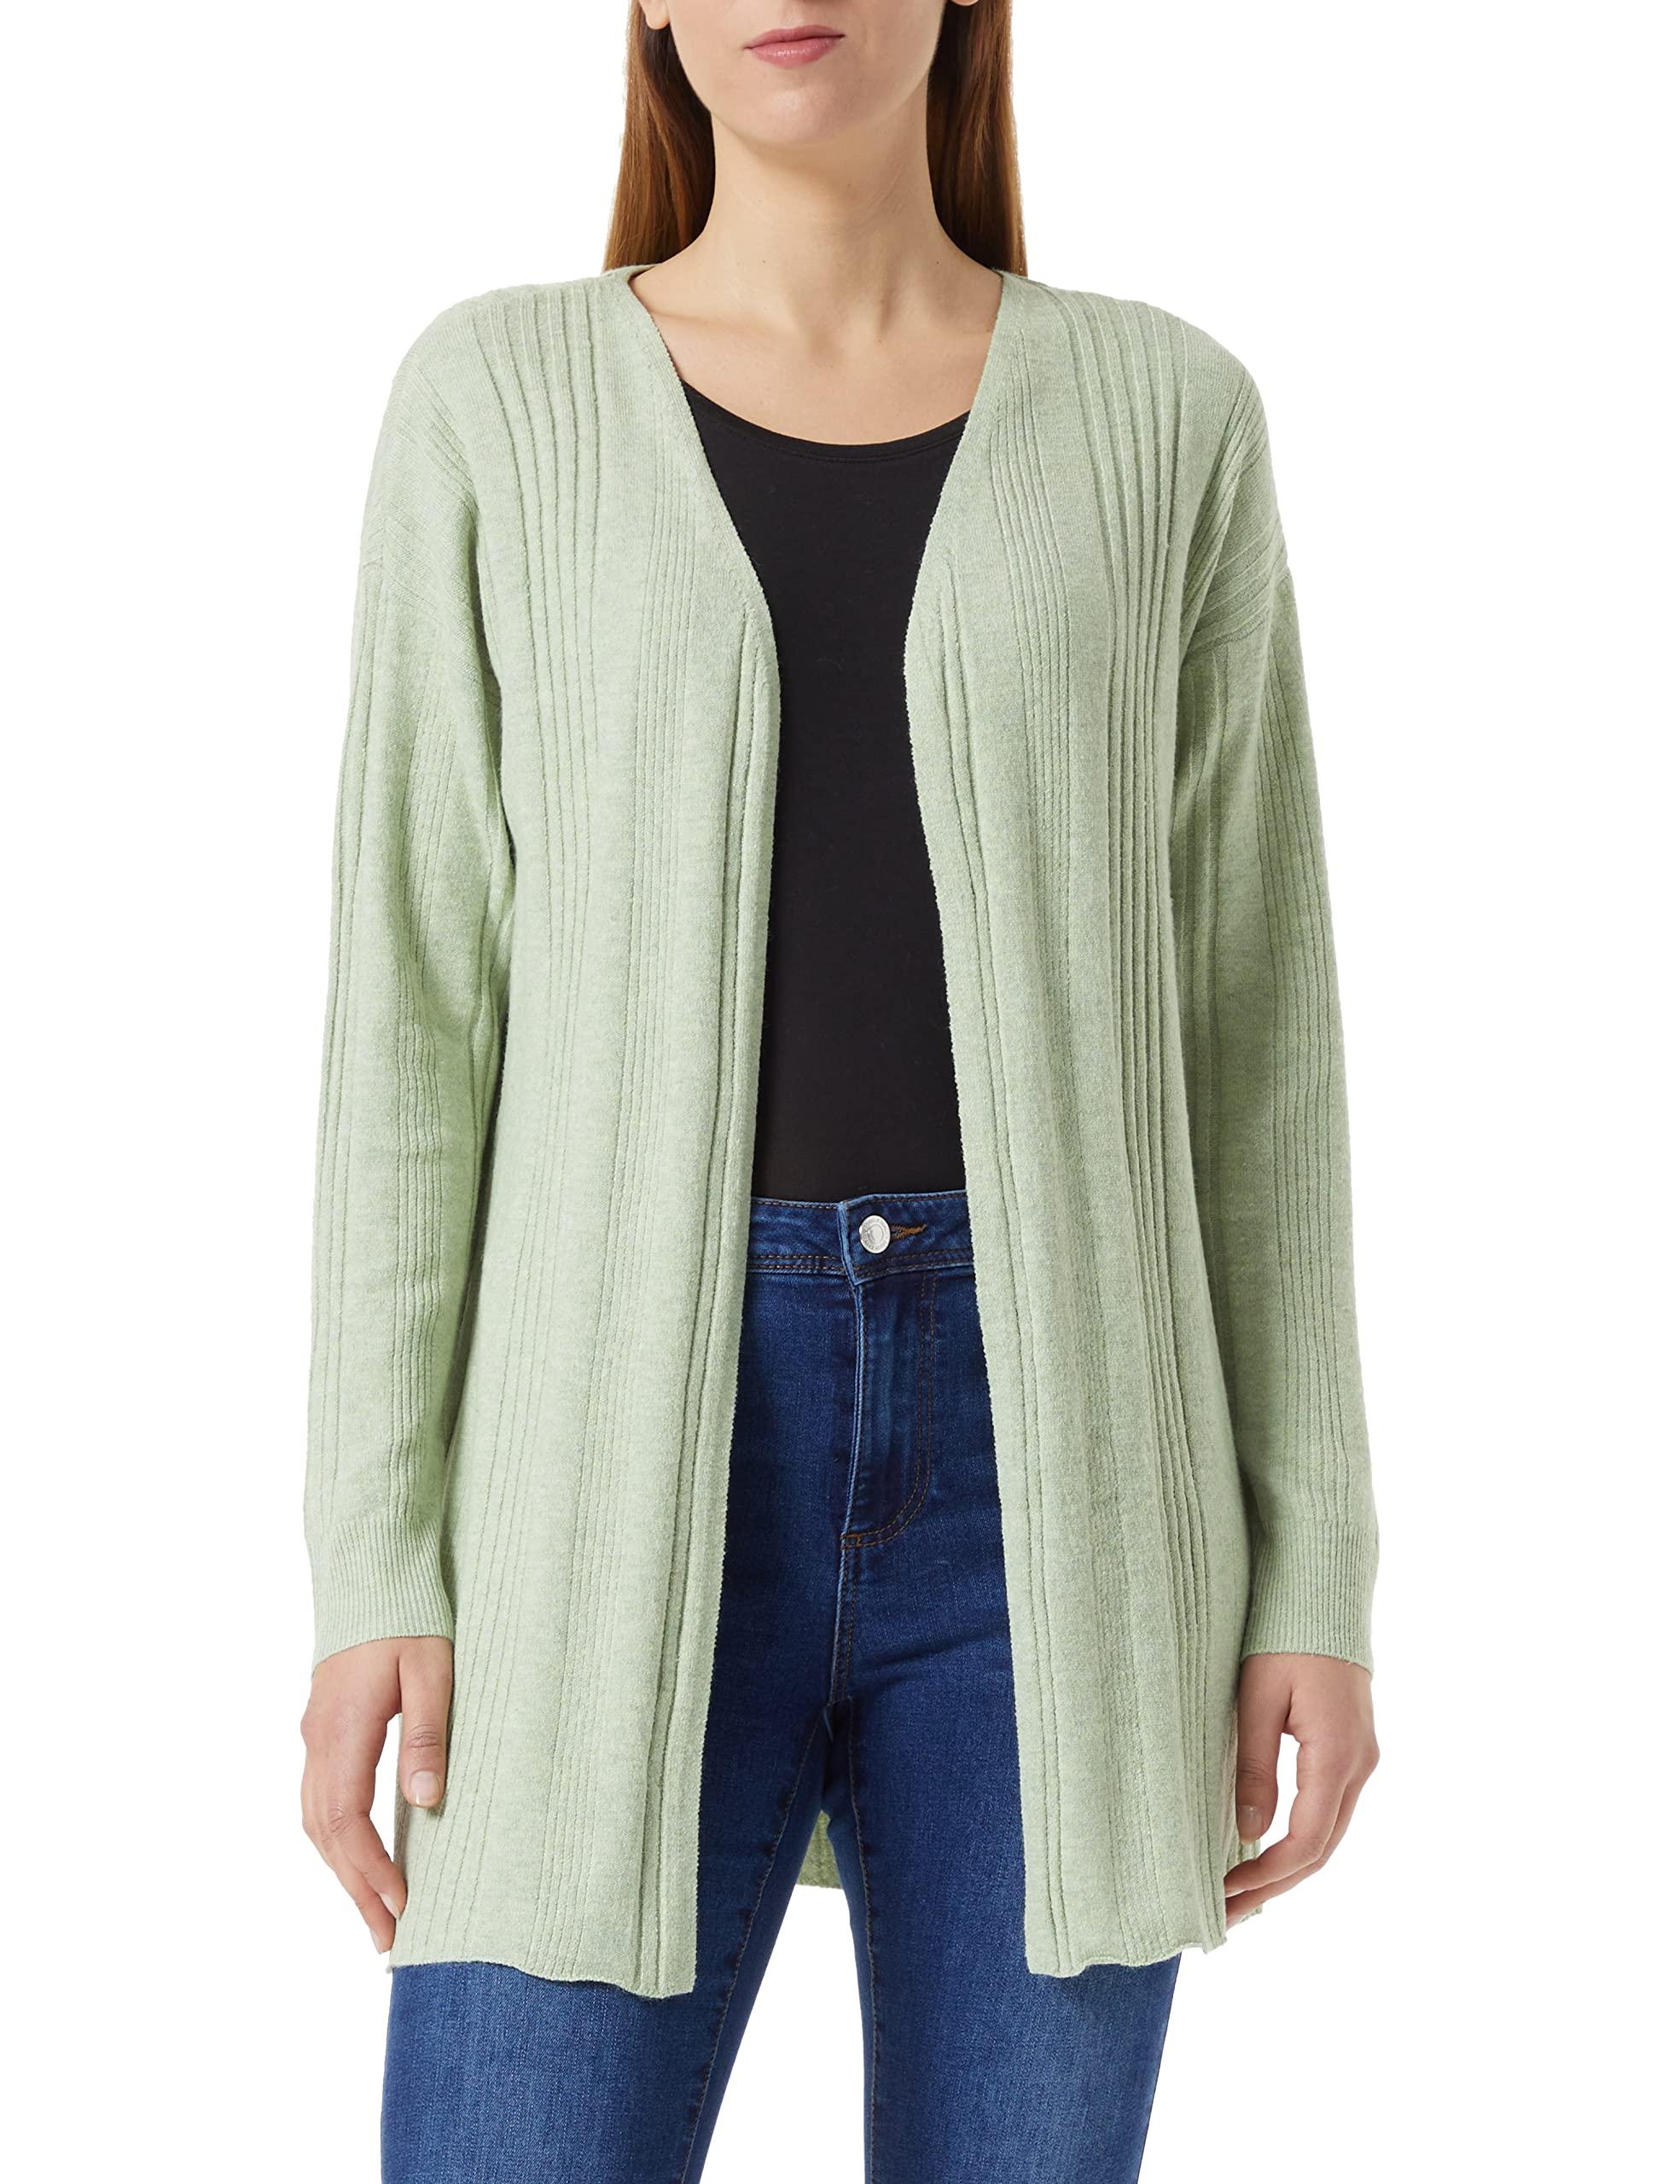 Ga UK Sweater in Boo Long Cardigan Moda Green | Vero Vminnie Ls Lyst